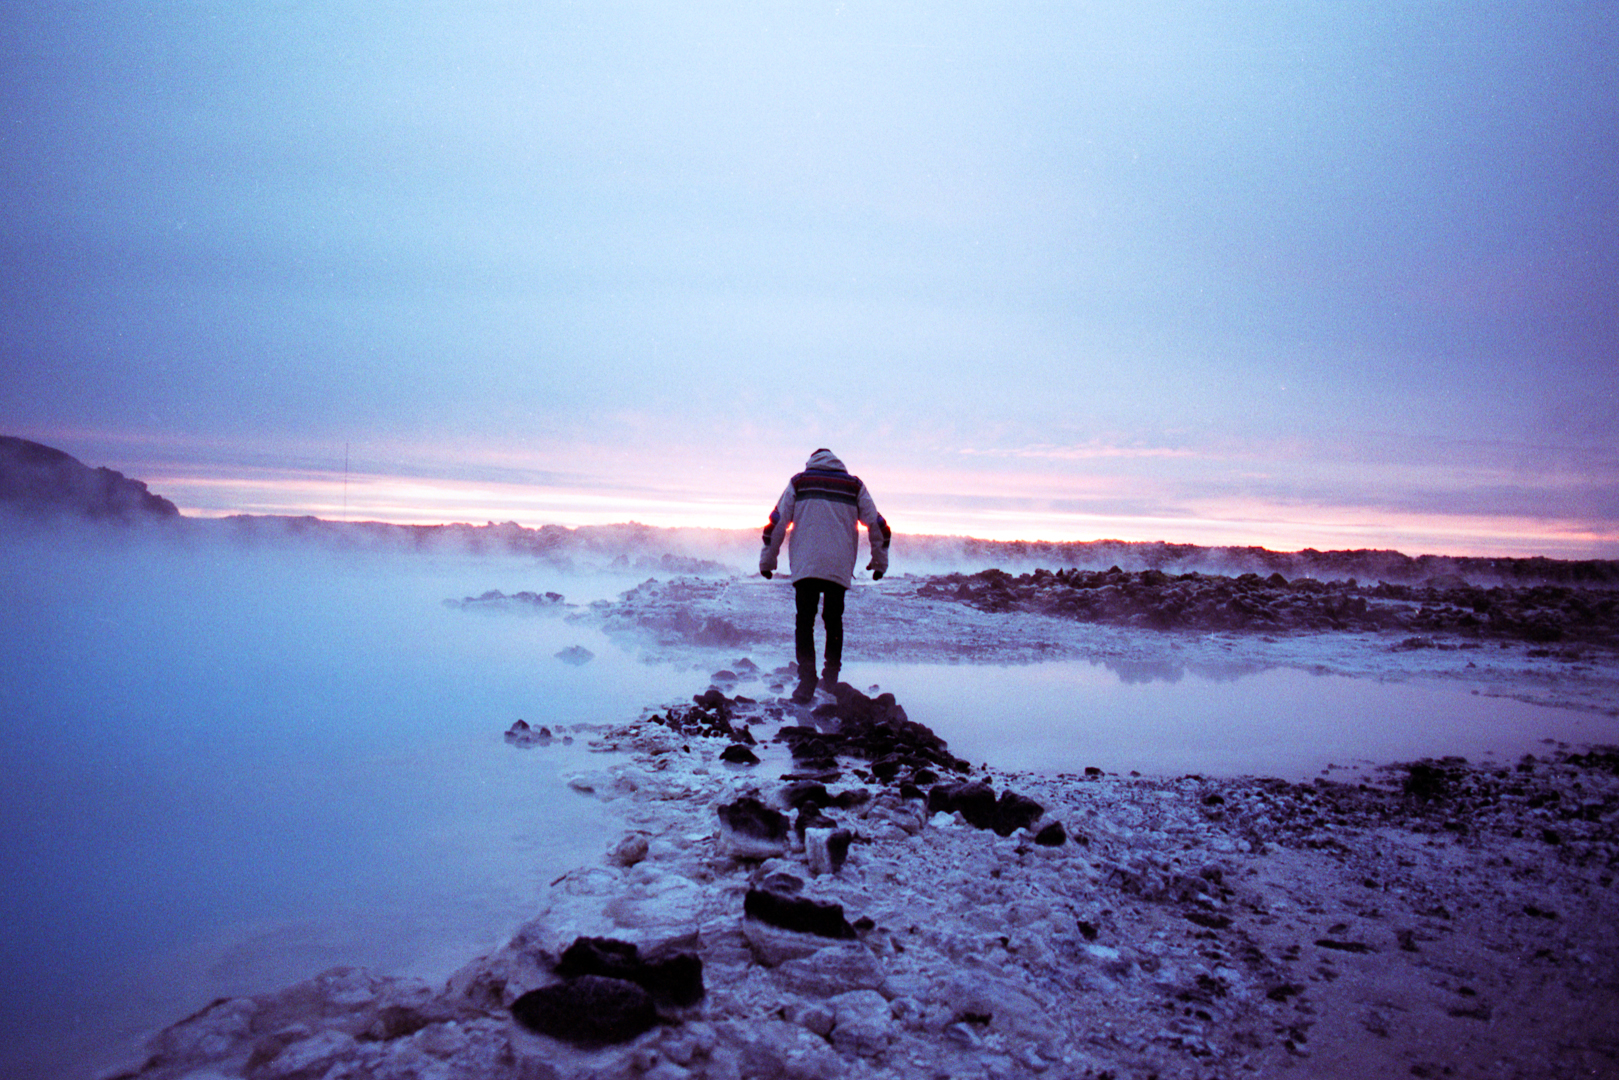  Iceland.  Logan Landry  35mm film 